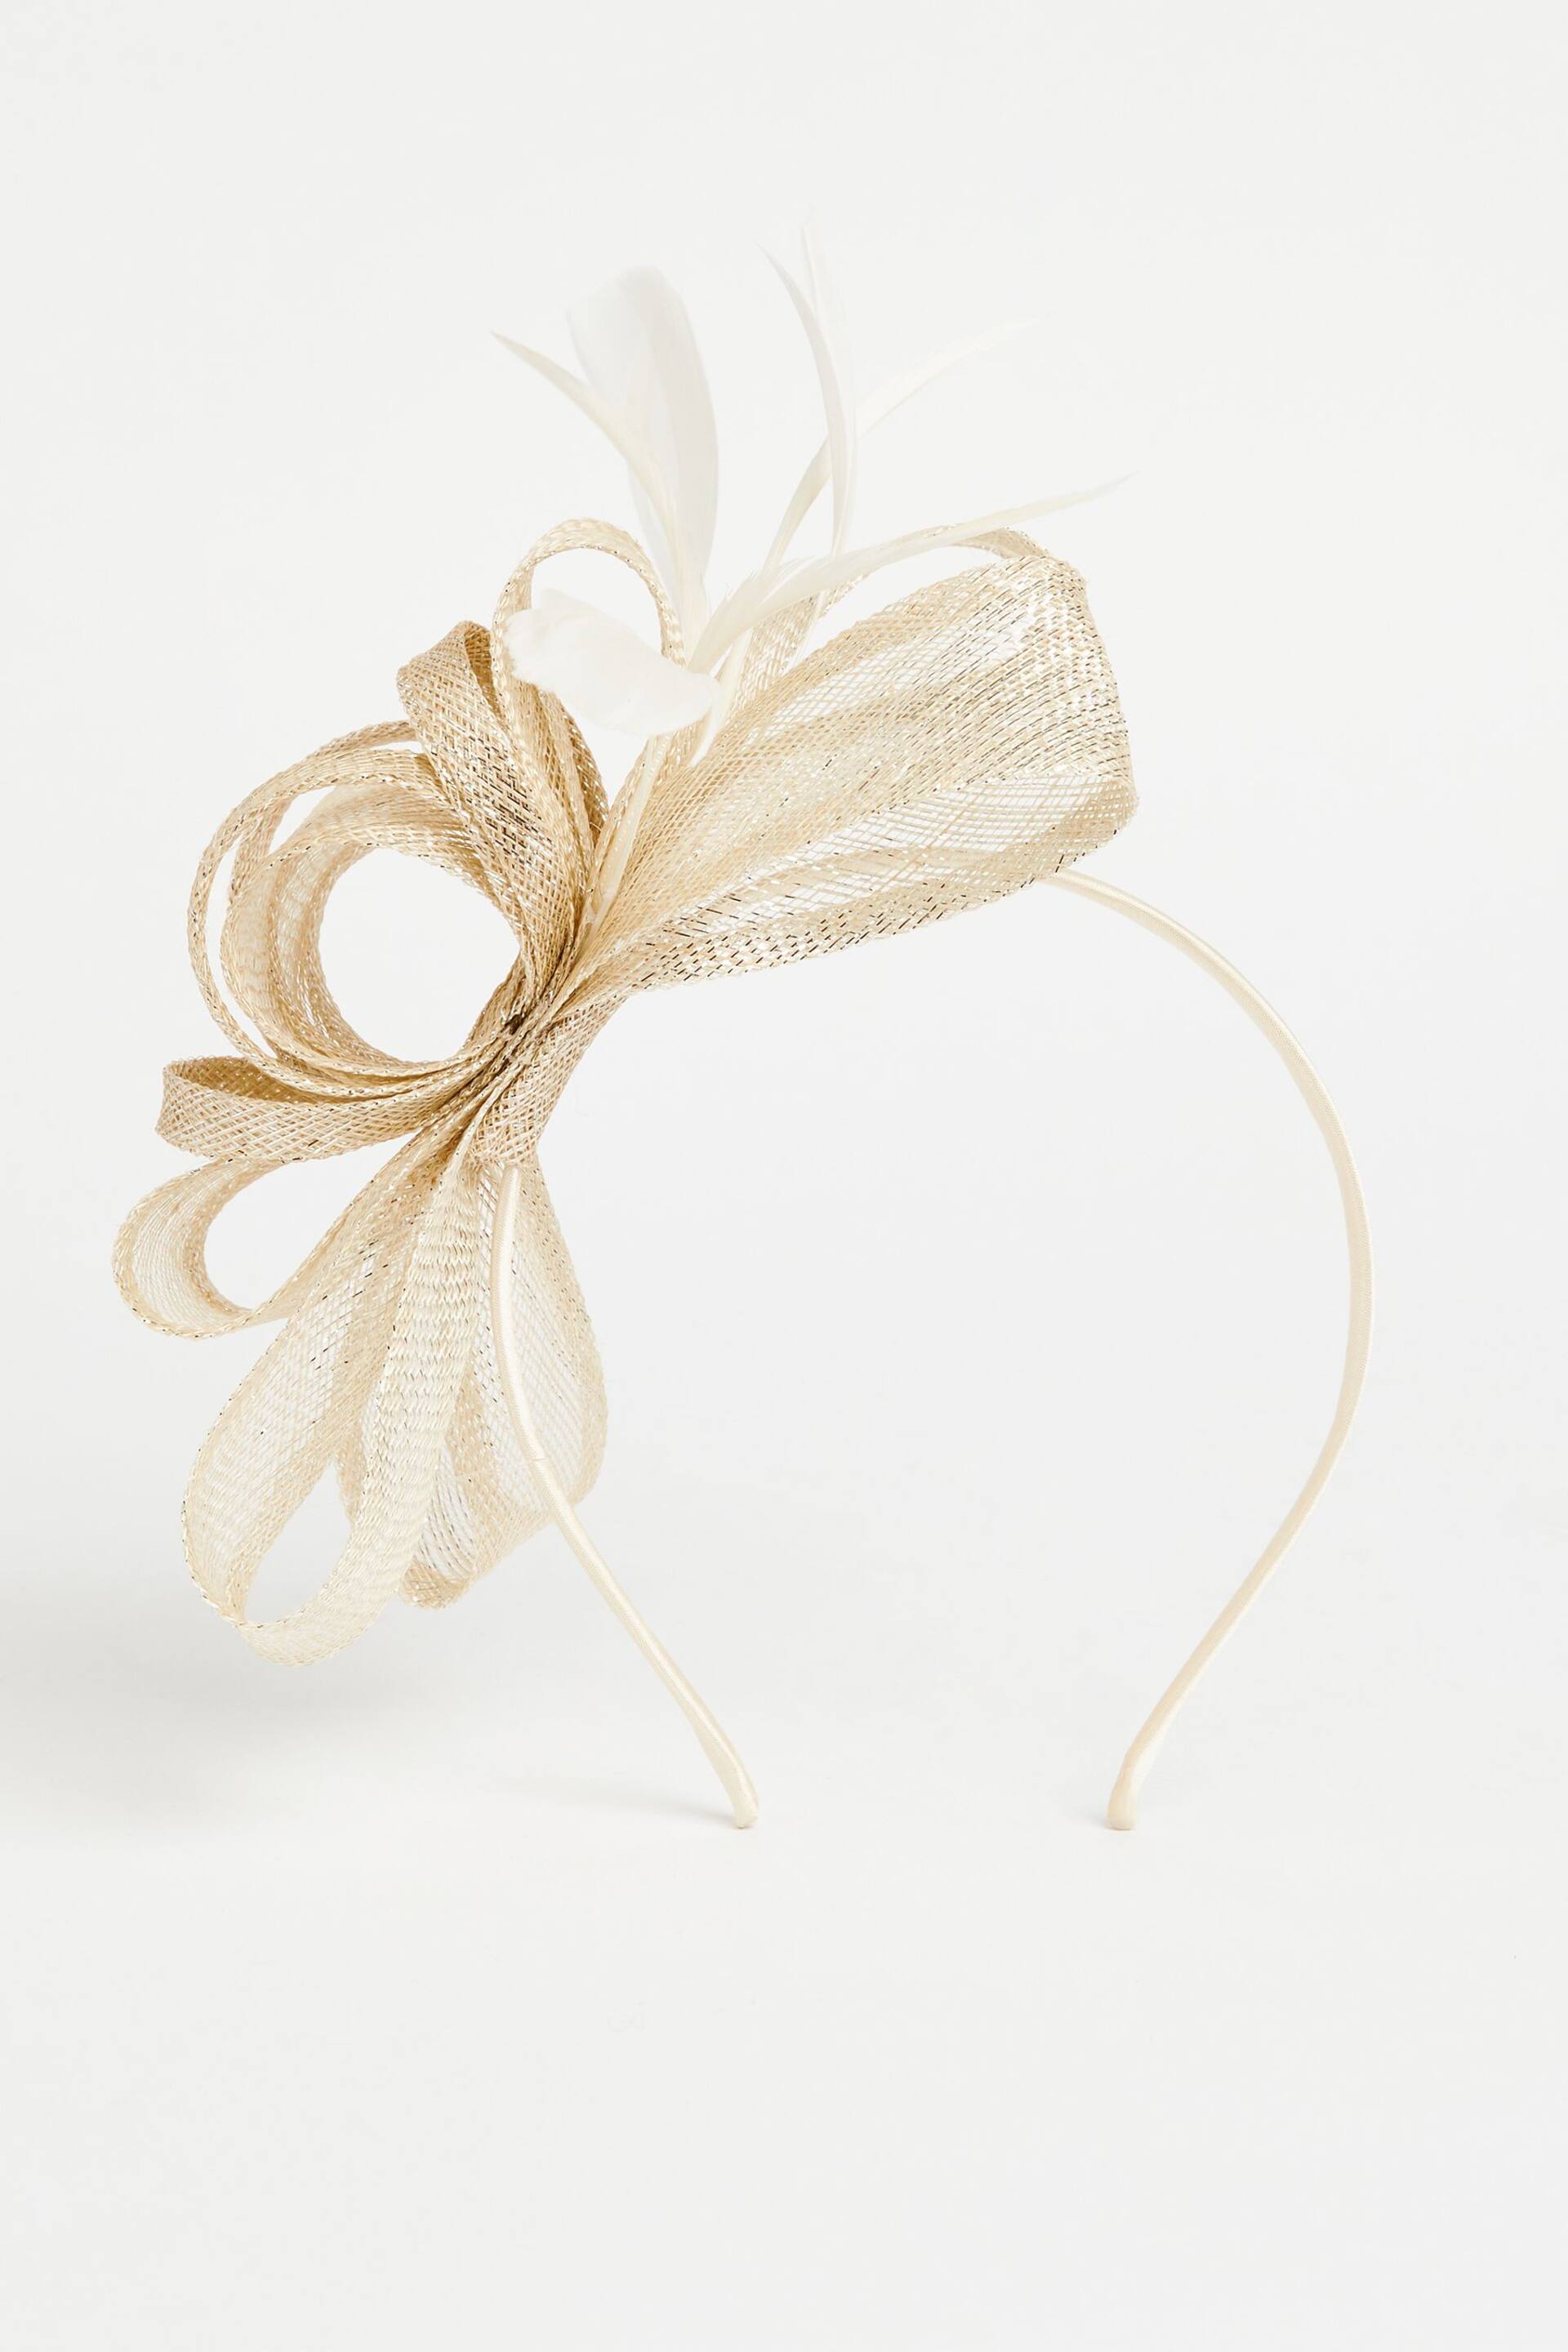 Lipsy Gold Bow Fascinator Headband - Image 4 of 4